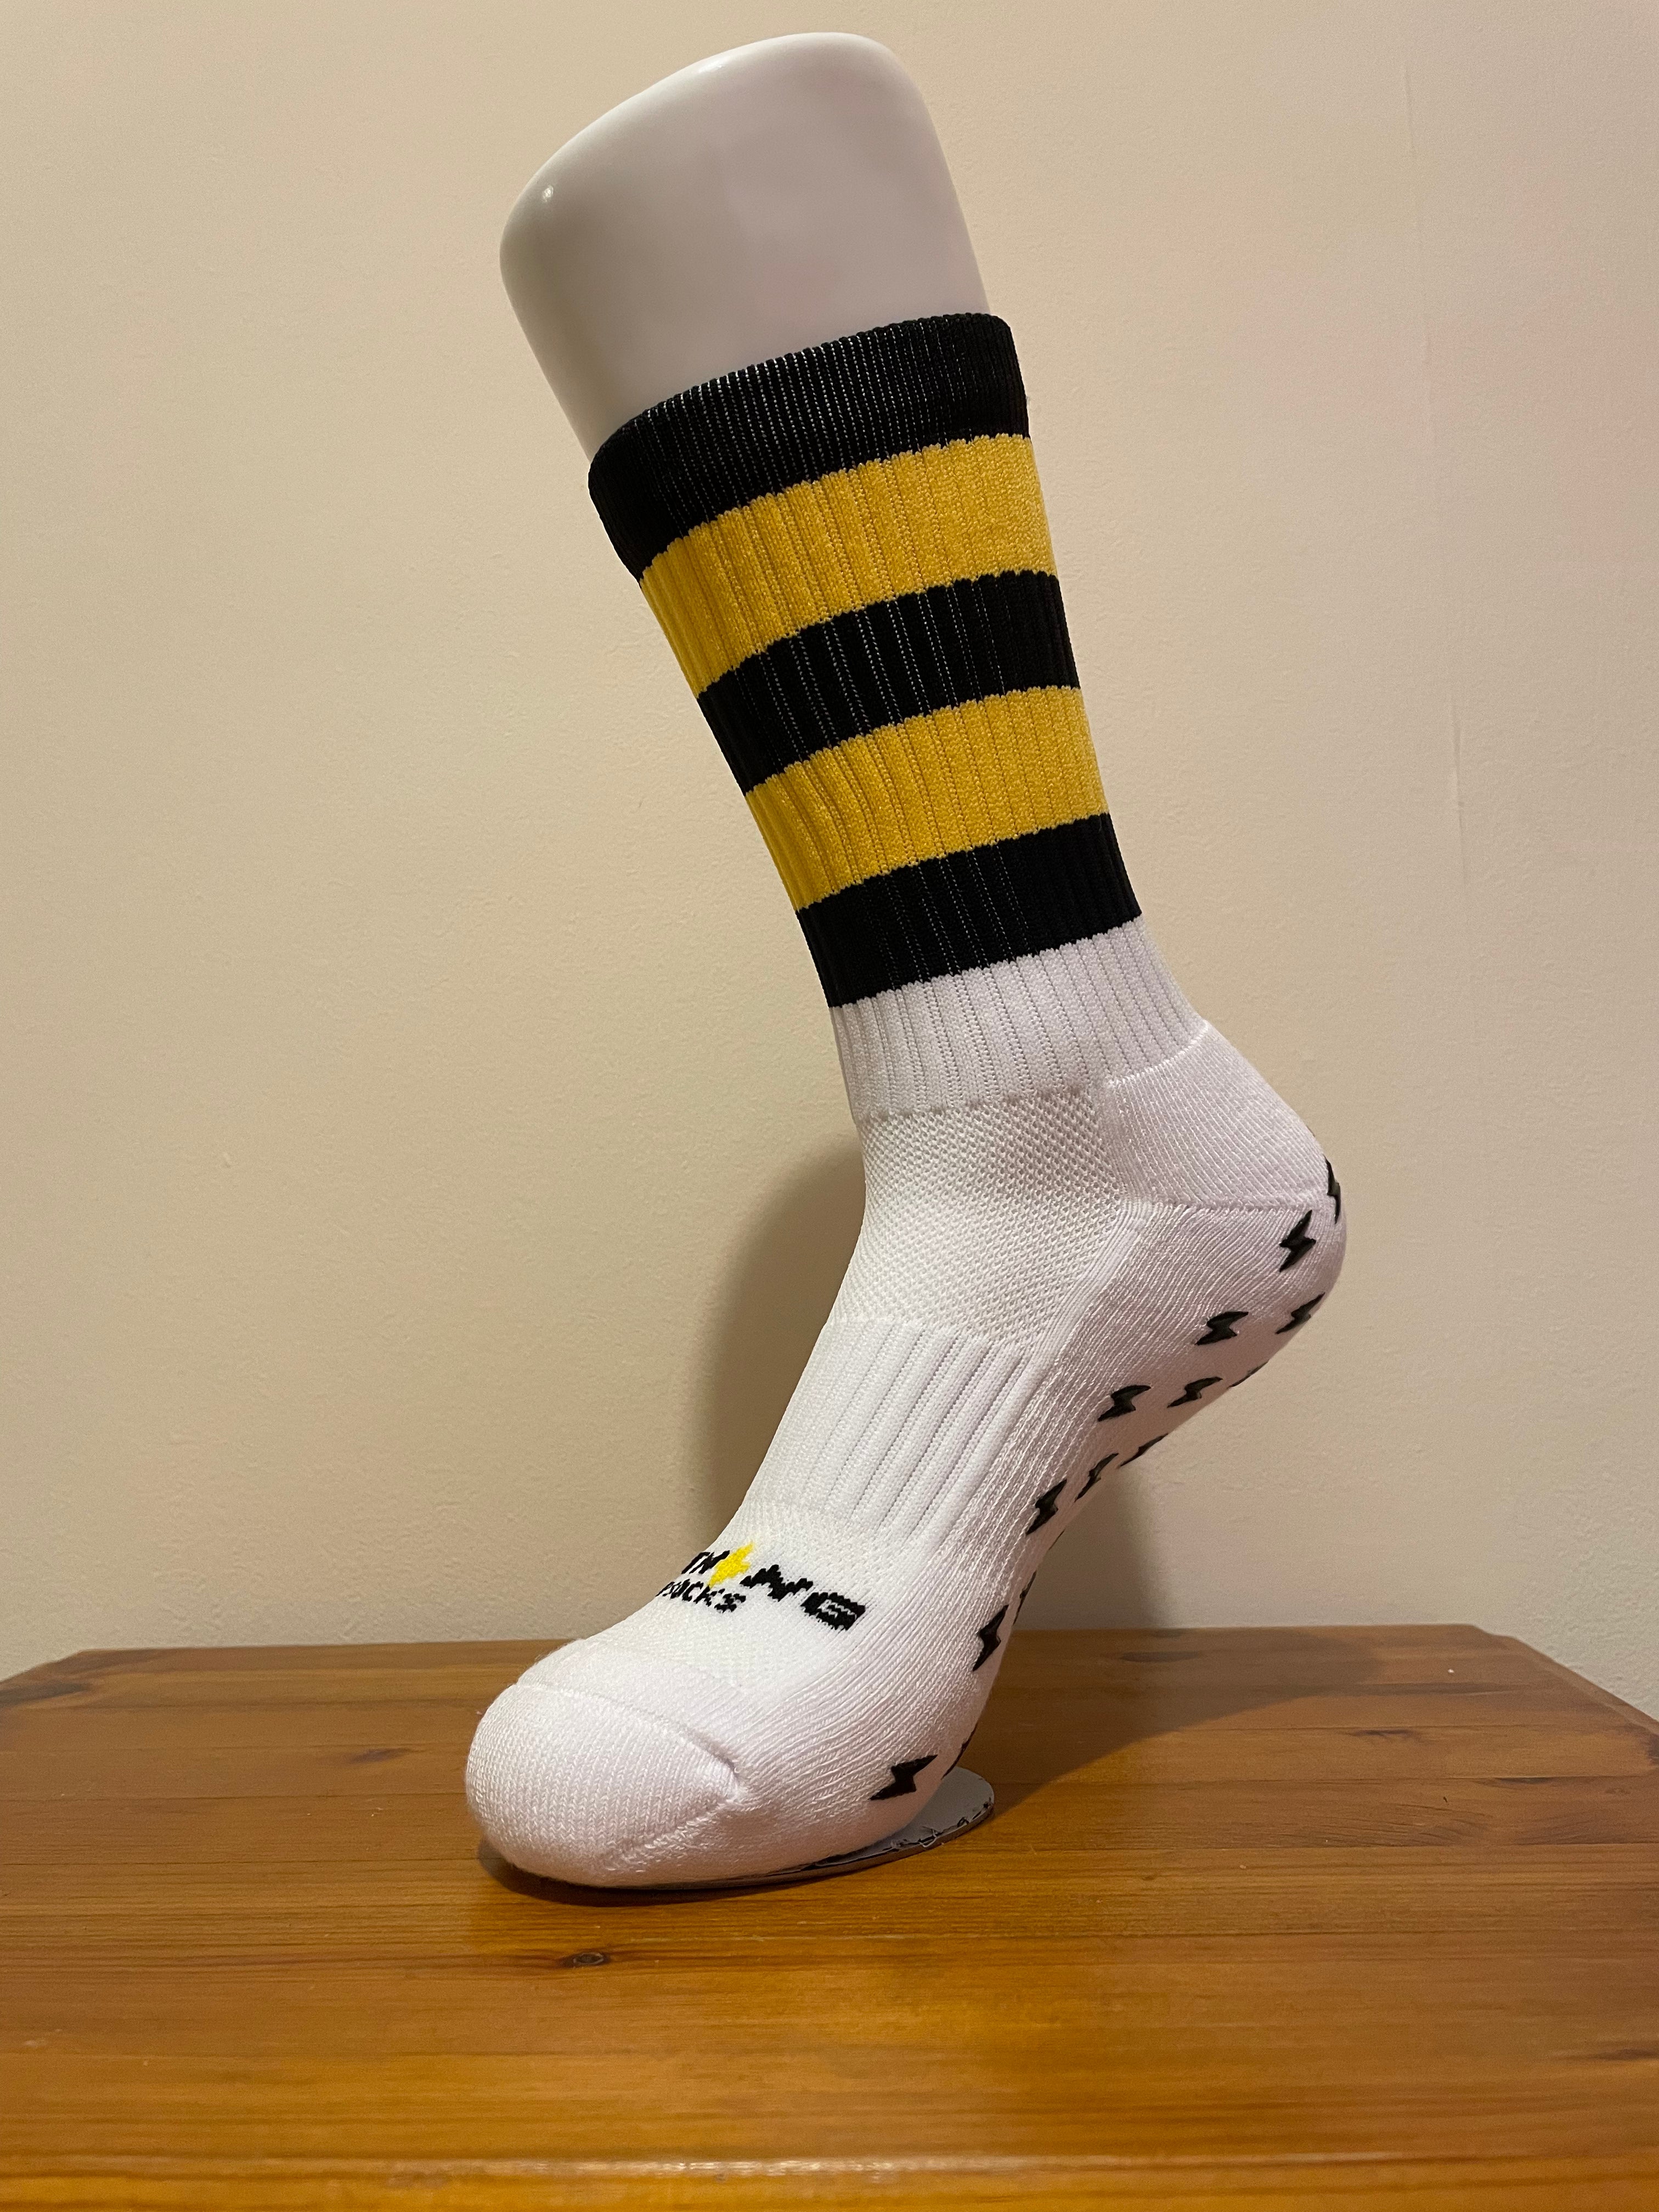 Socks unisex yellow black